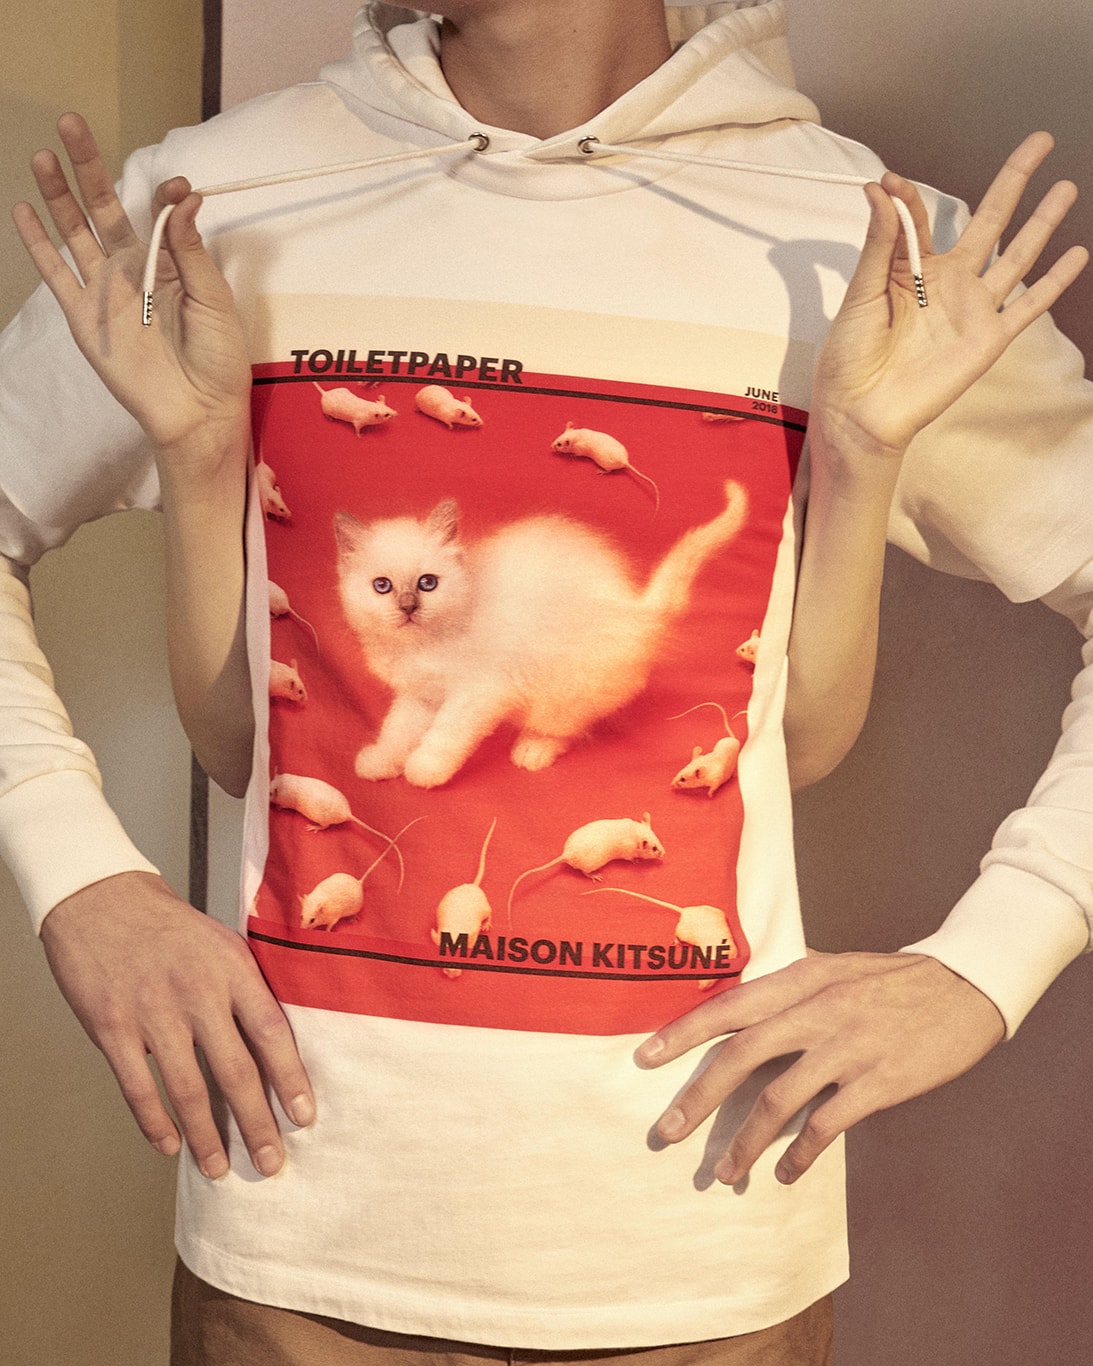 Maison Kitsune Toiletpaper magazine Collaboration june 2018 artwork Pierpaolo Ferrari Maurizio Cattelan new york launch drop debut collection unisex